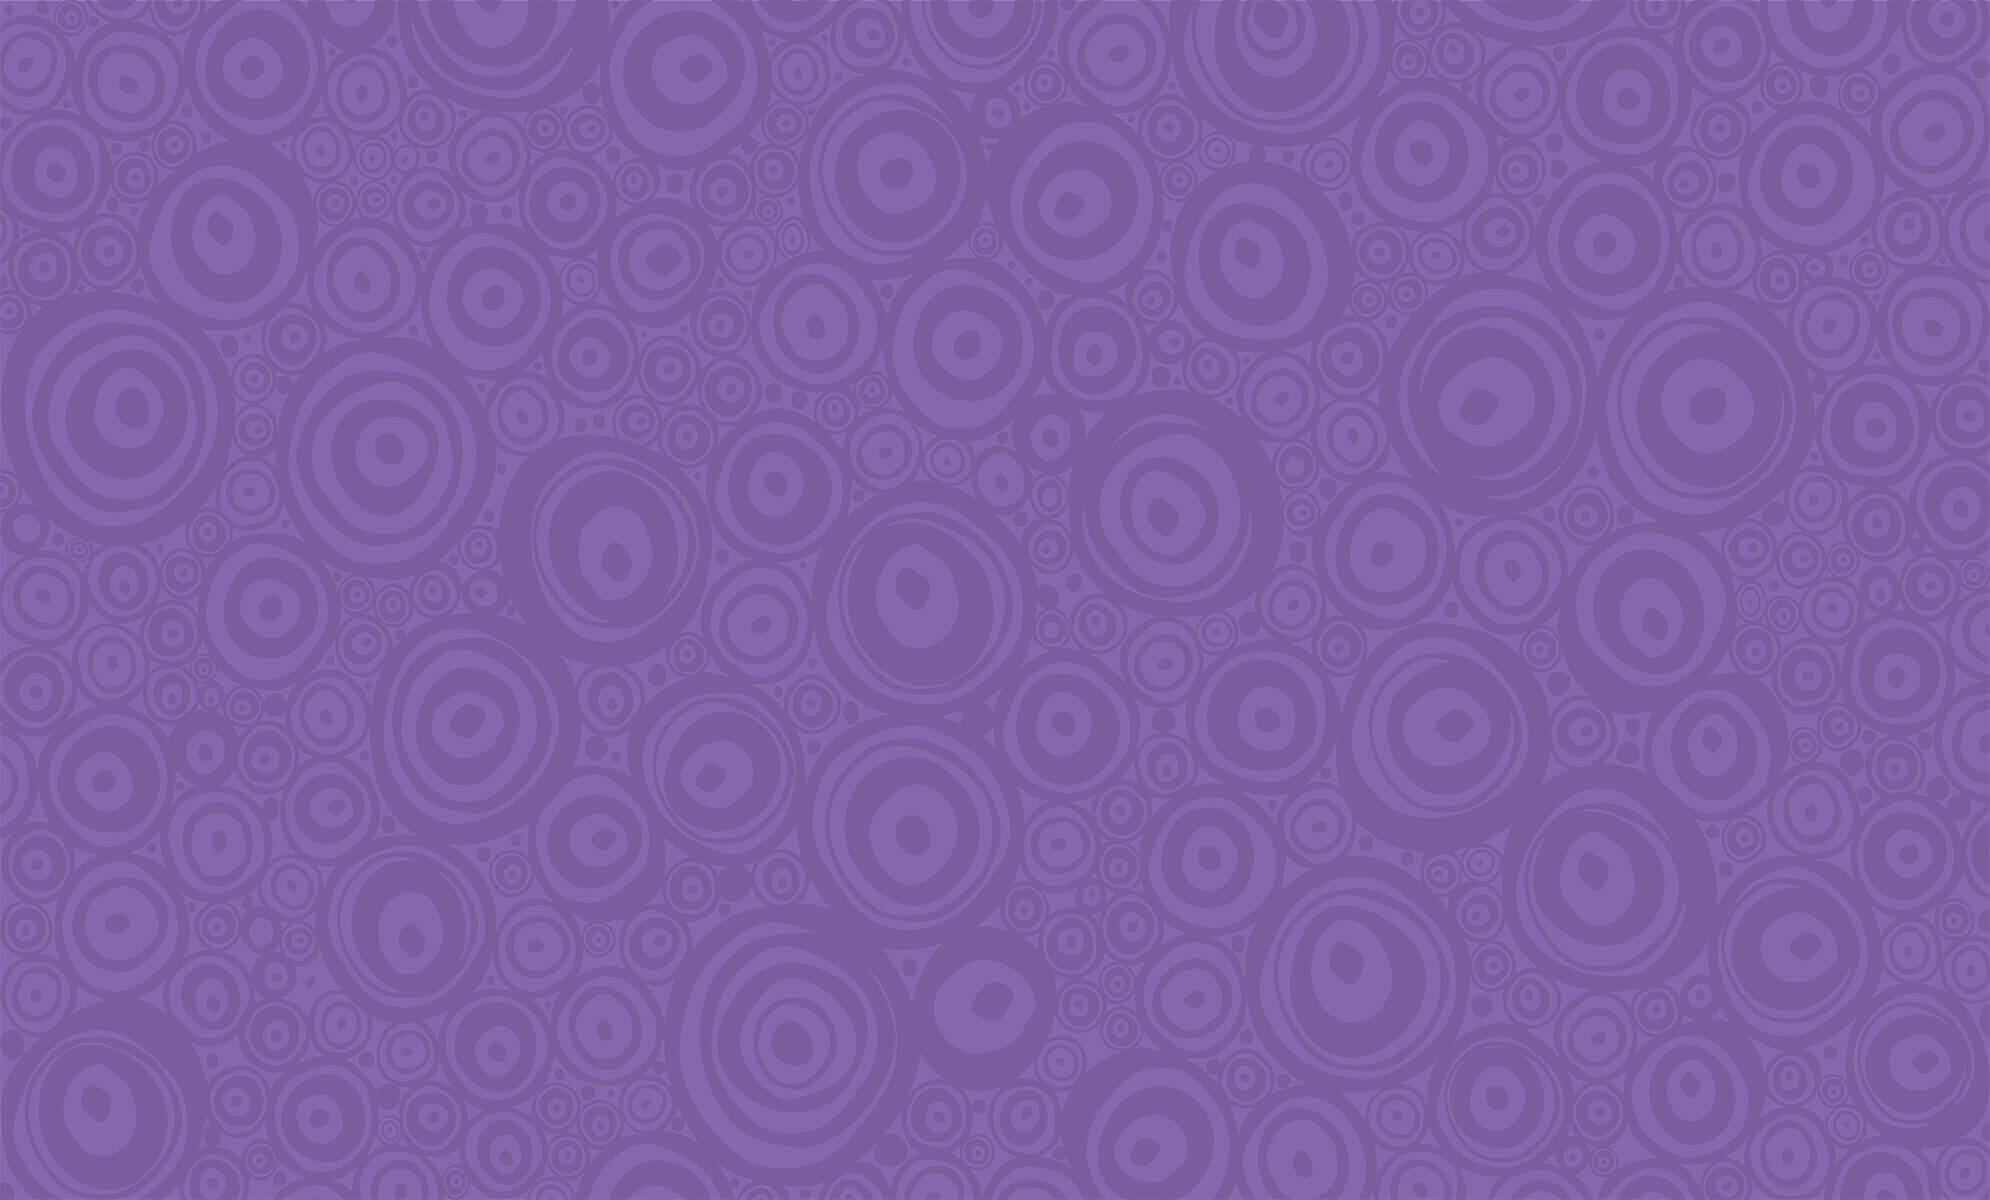 Background circles - purple